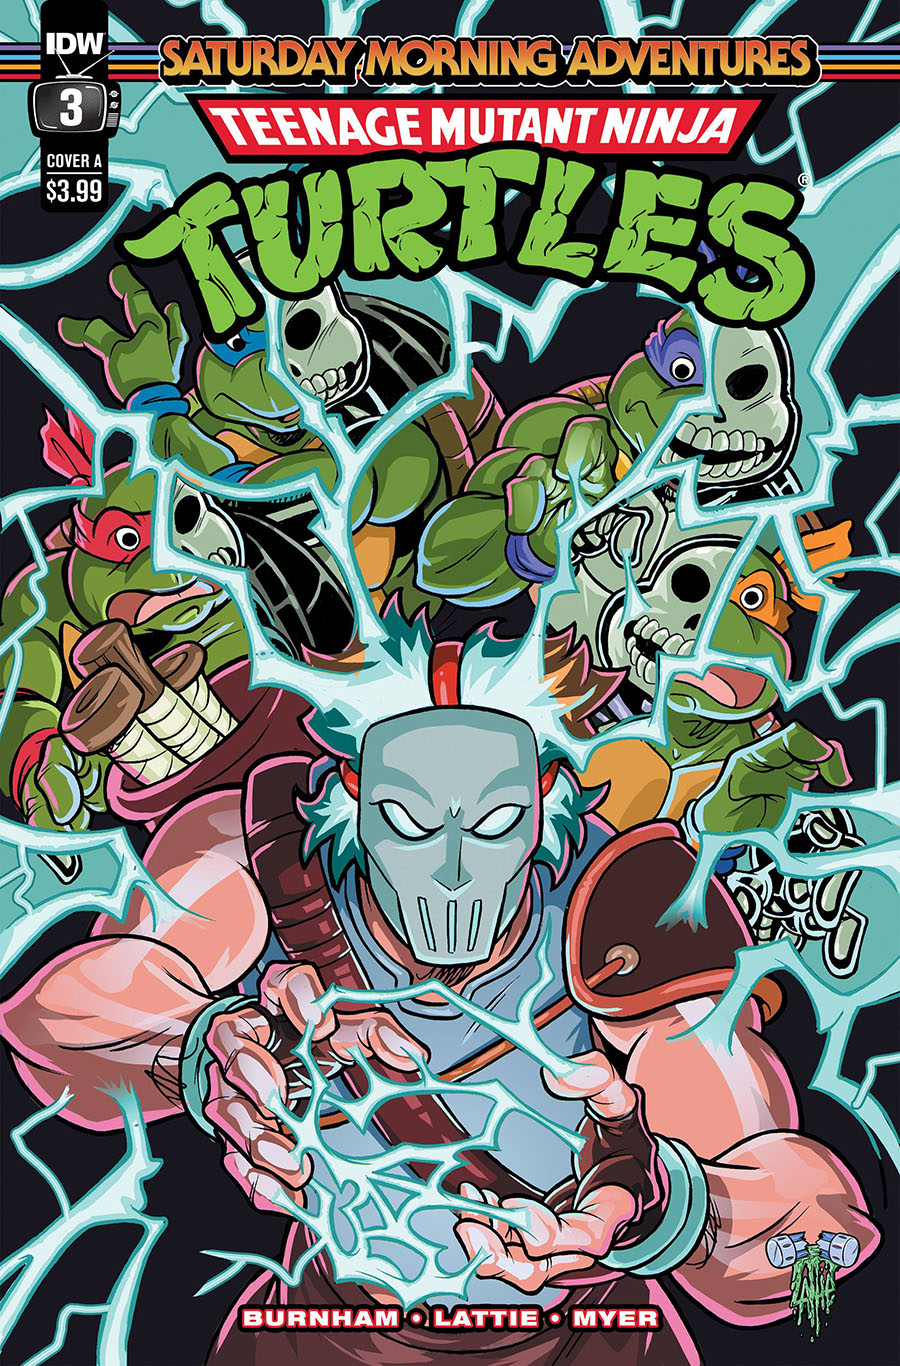 Teenage Mutant Ninja Turtles Saturday Morning Adventures #3 Cover A Regular Tim Lattie Cover